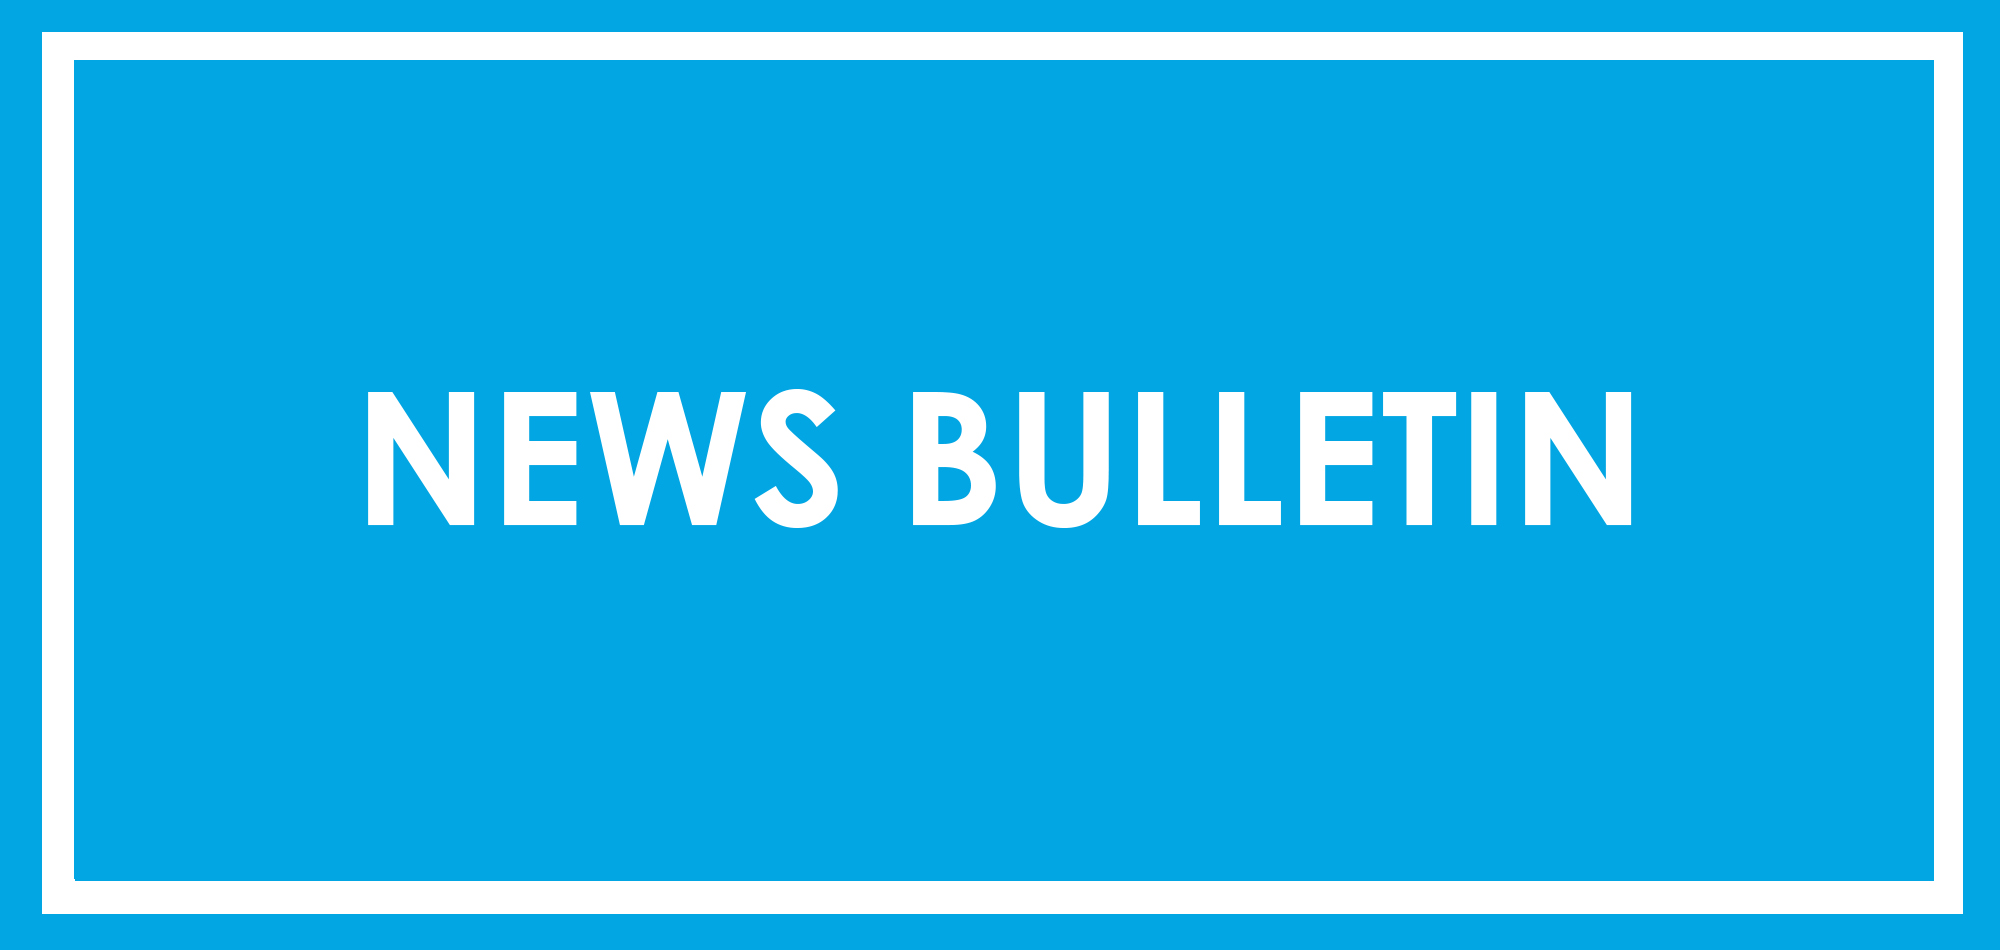 News Bulletin - 17.11.21